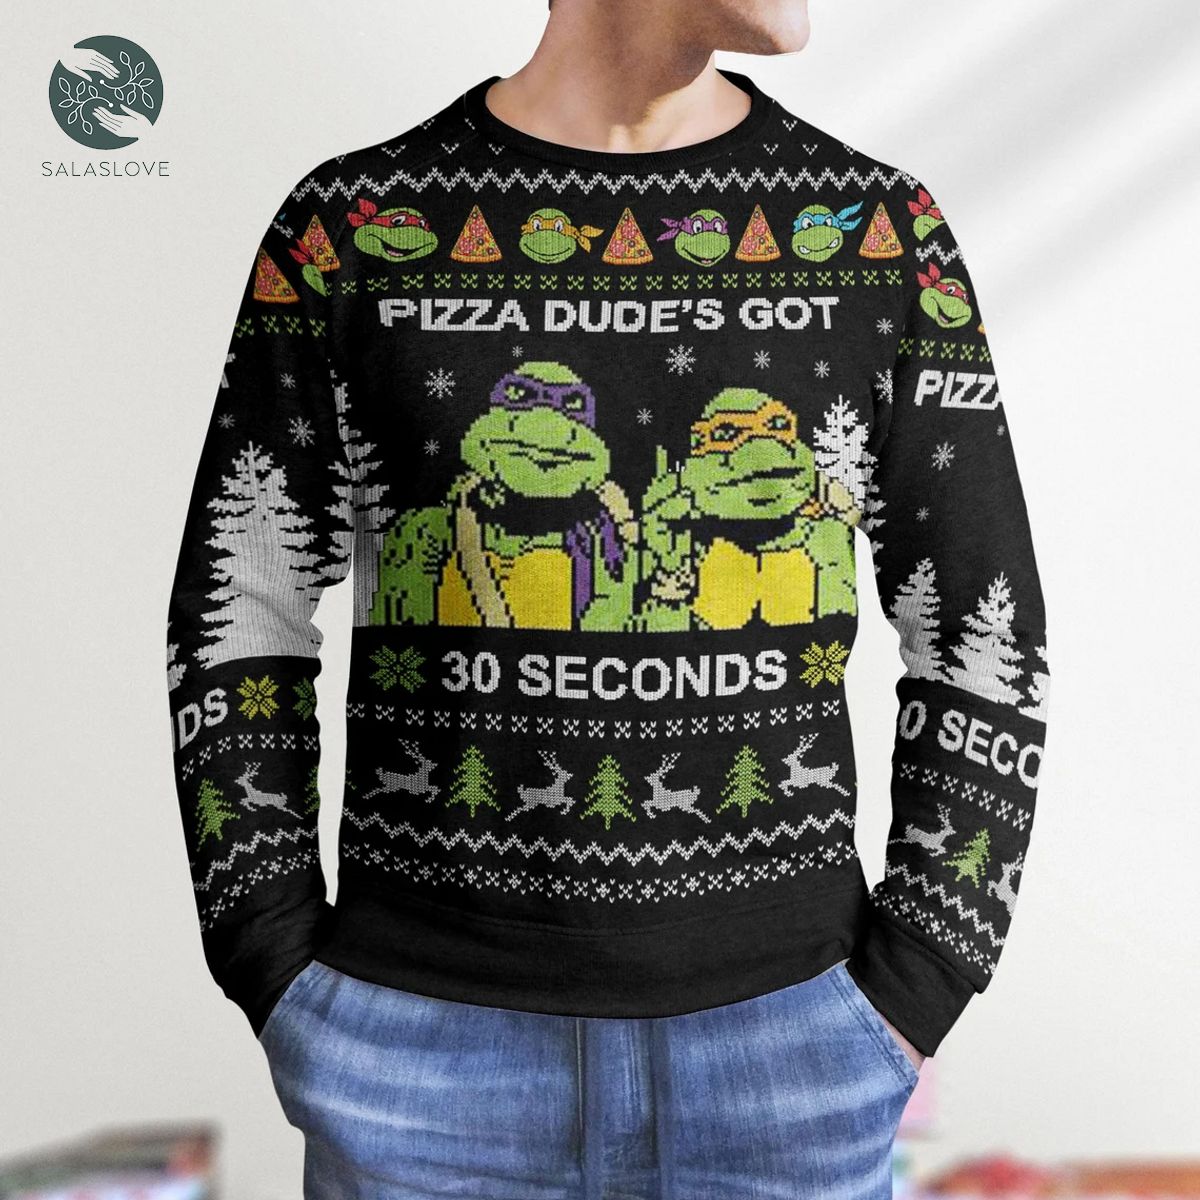 Pizza Dudes Got 30 Serconds Teenage Mutant Ninja Turtles Sweater


